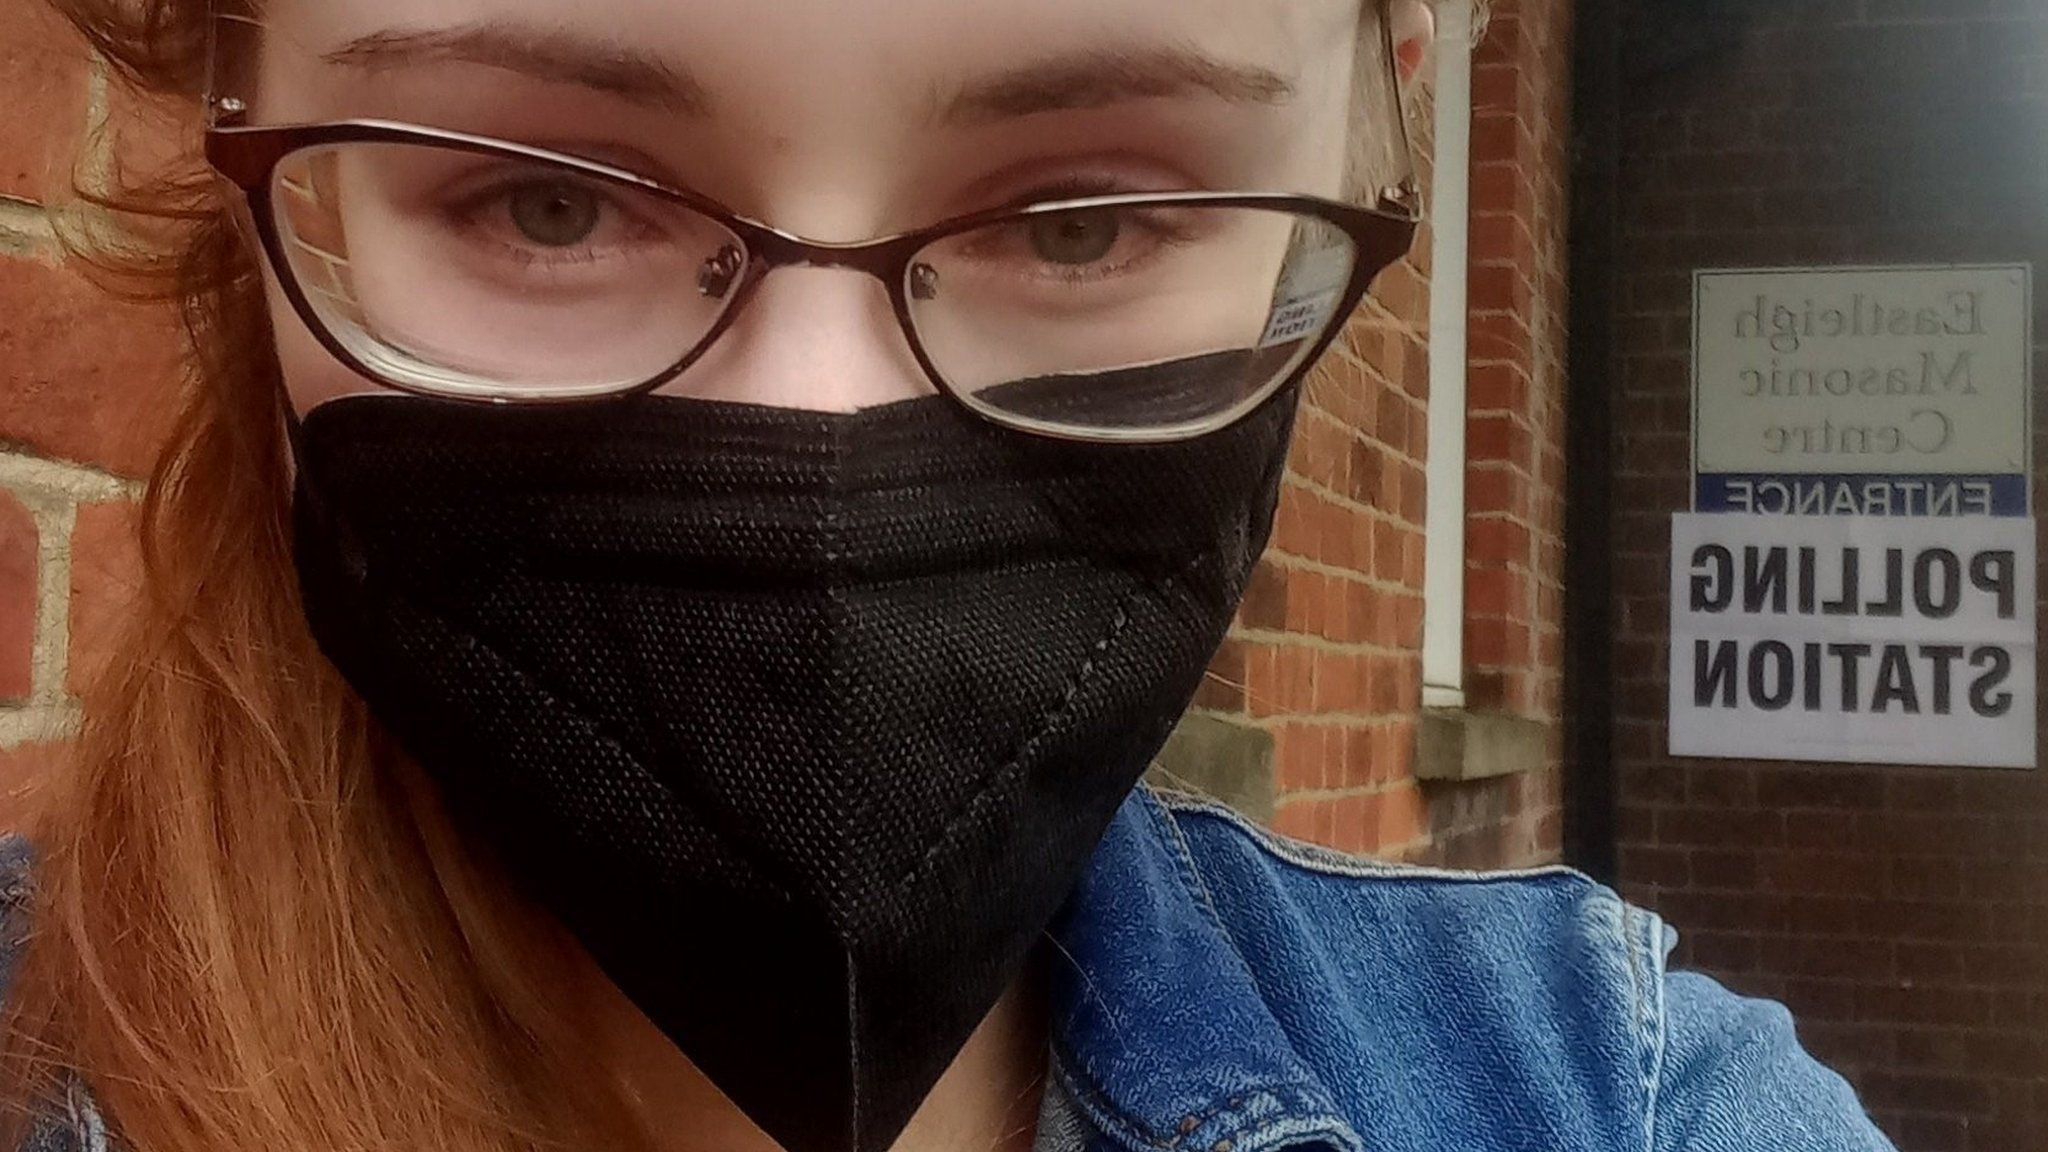 Andrea Barrett wearing a mask outside polling station